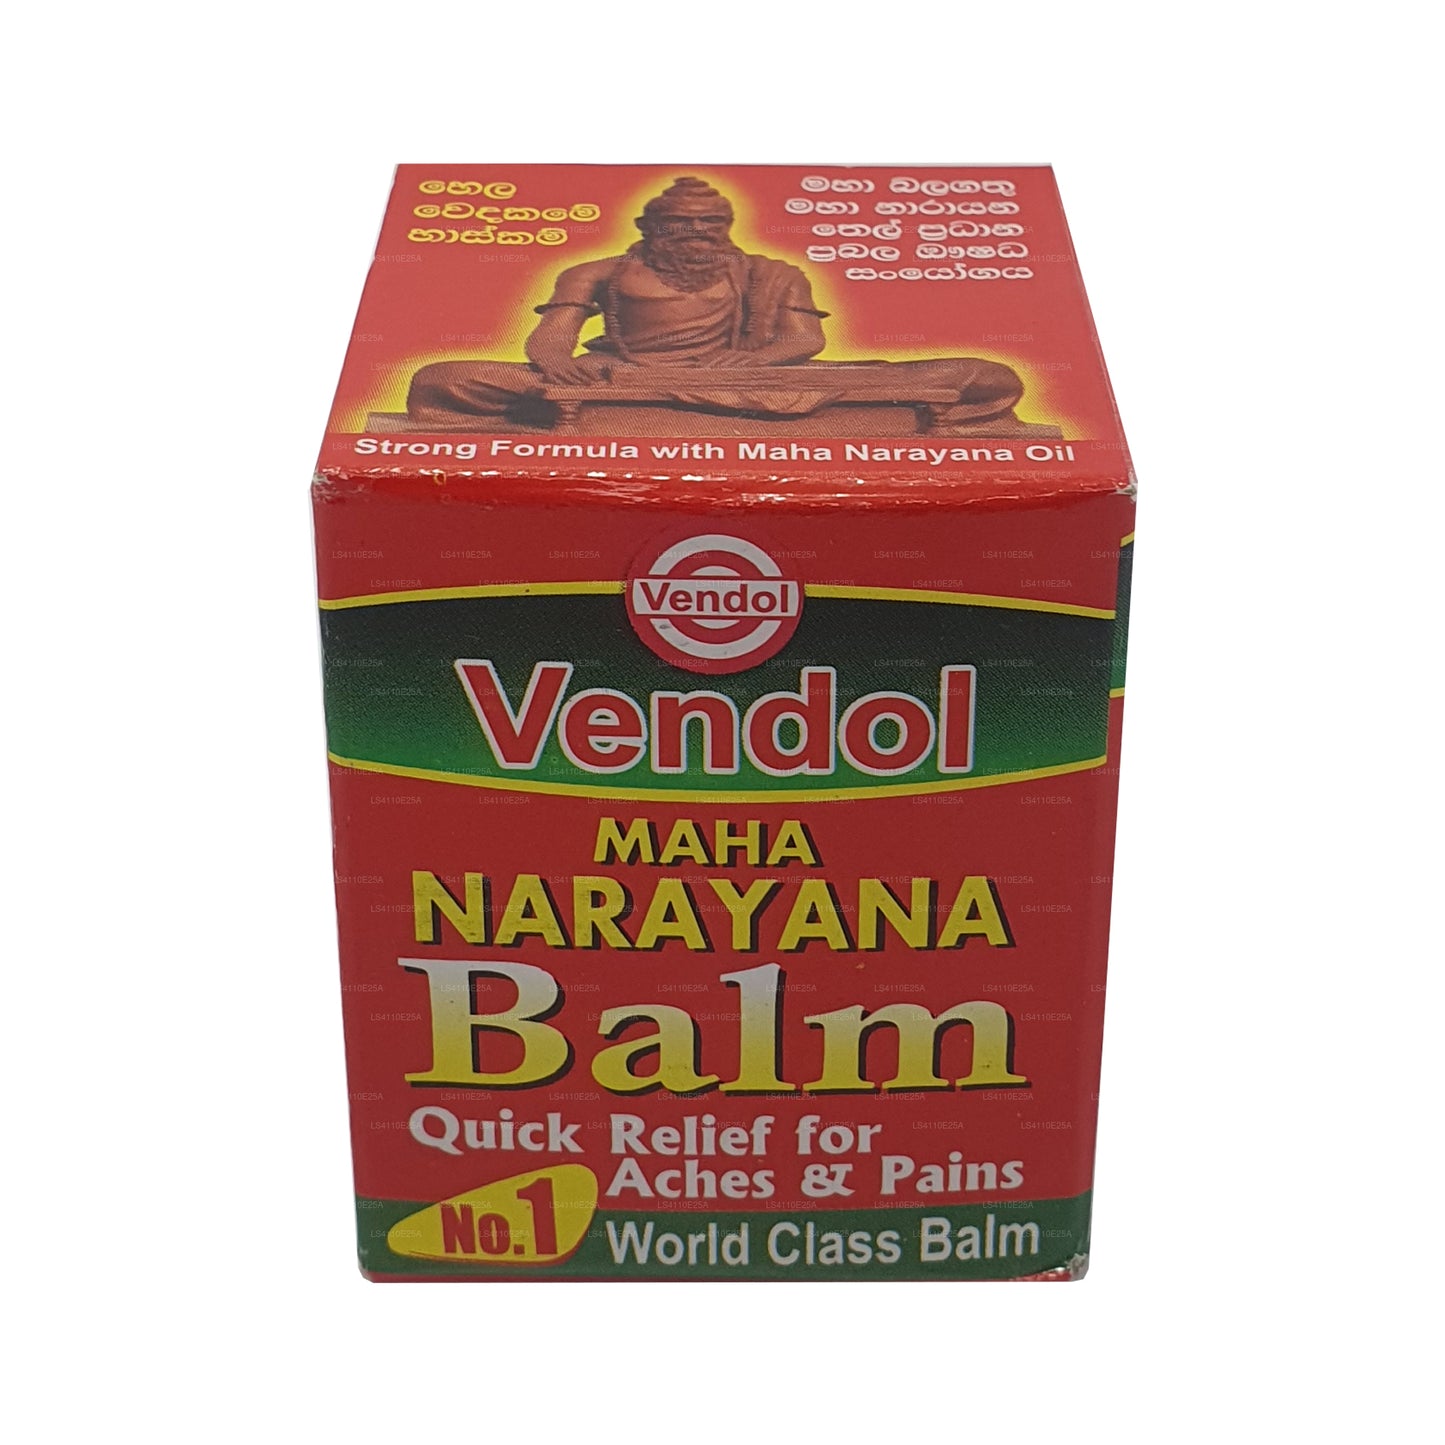 Vendol Maha Narayana Balsamı (5g)